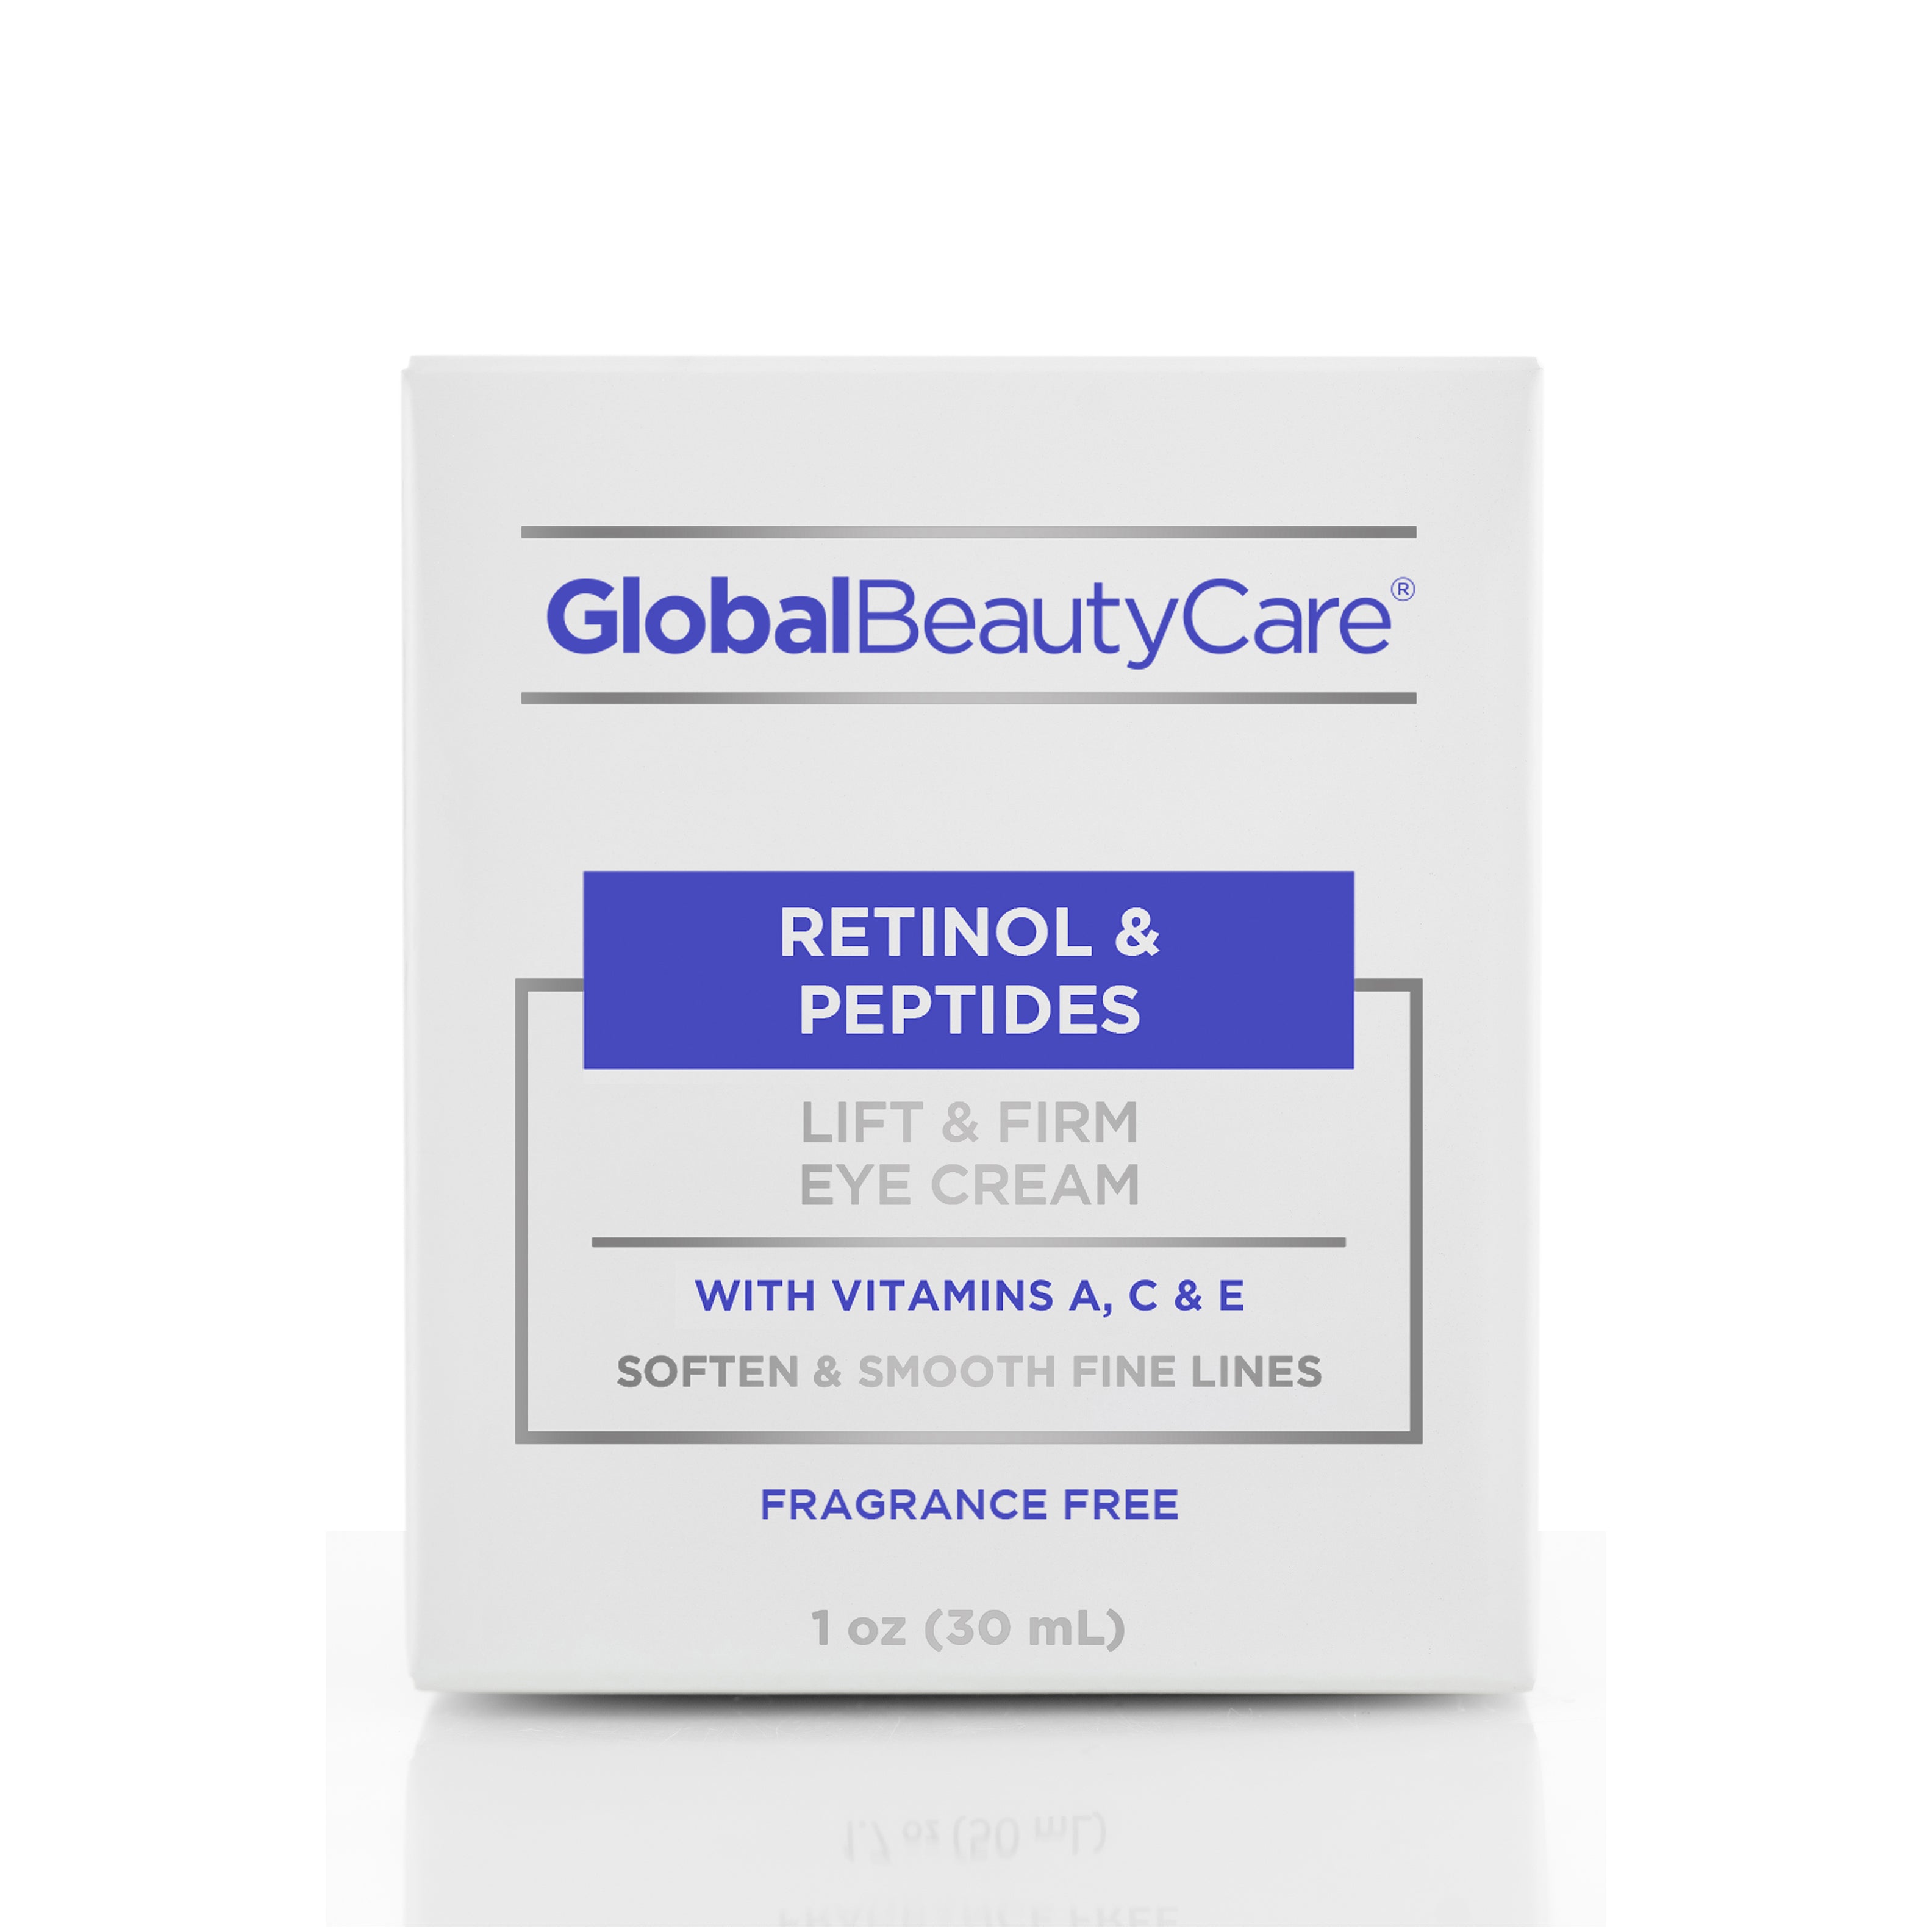 Retinol & Peptides Lift & Firm Eye Cream